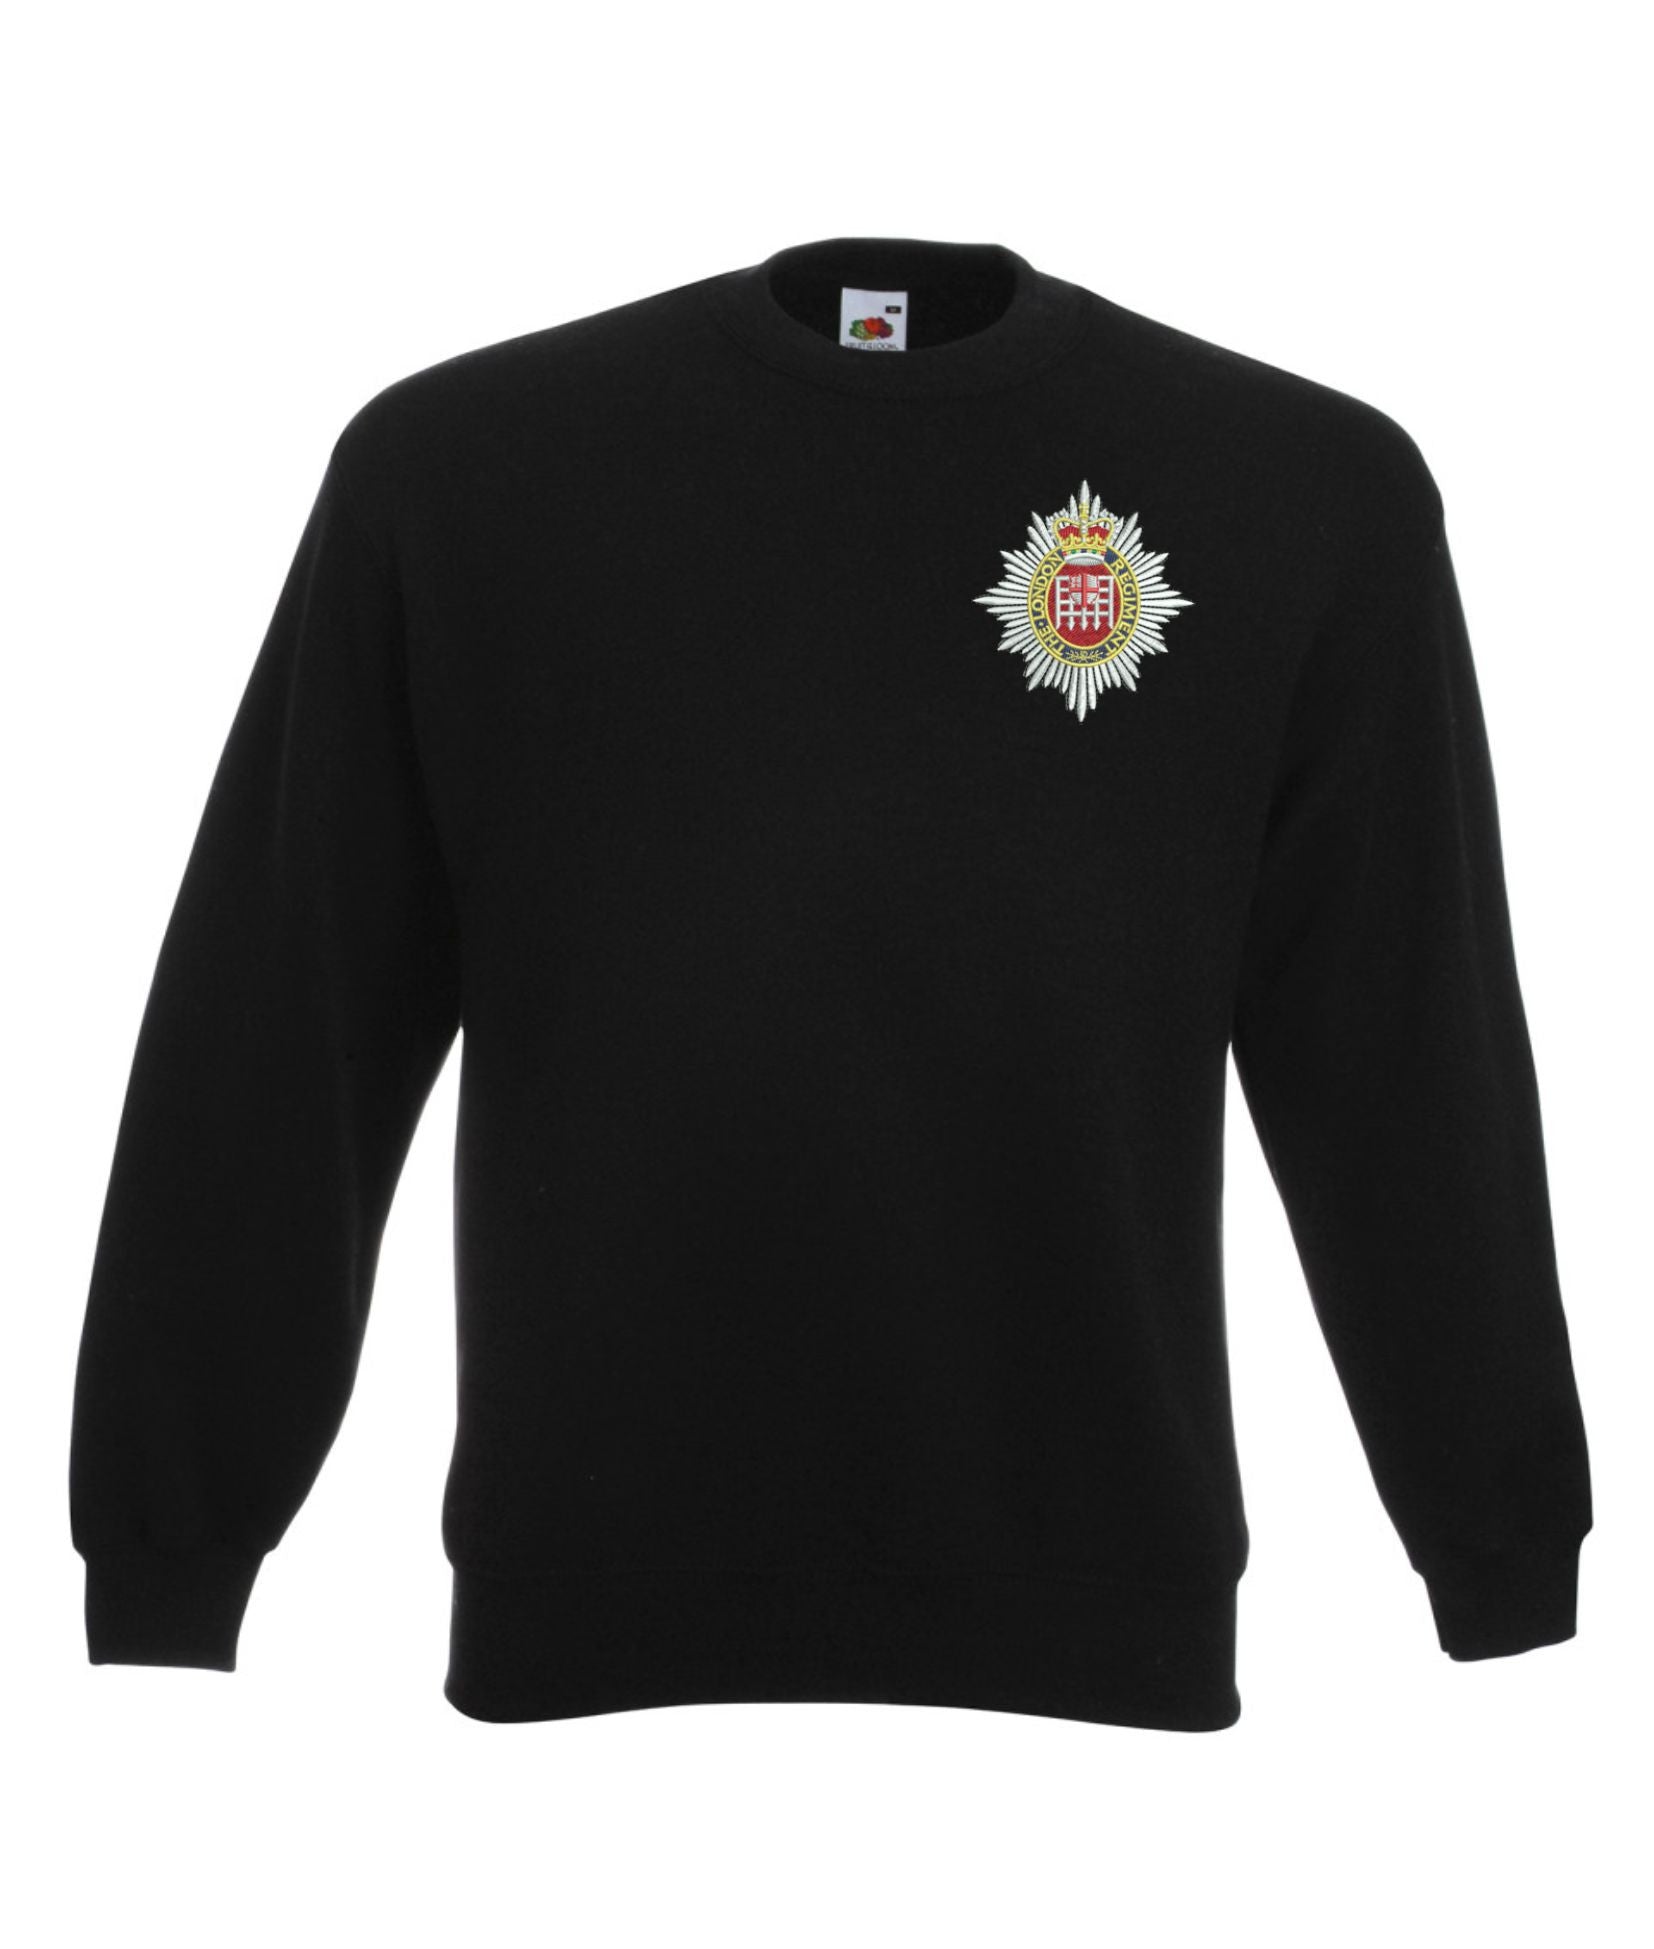 London Regiment Sweatshirts